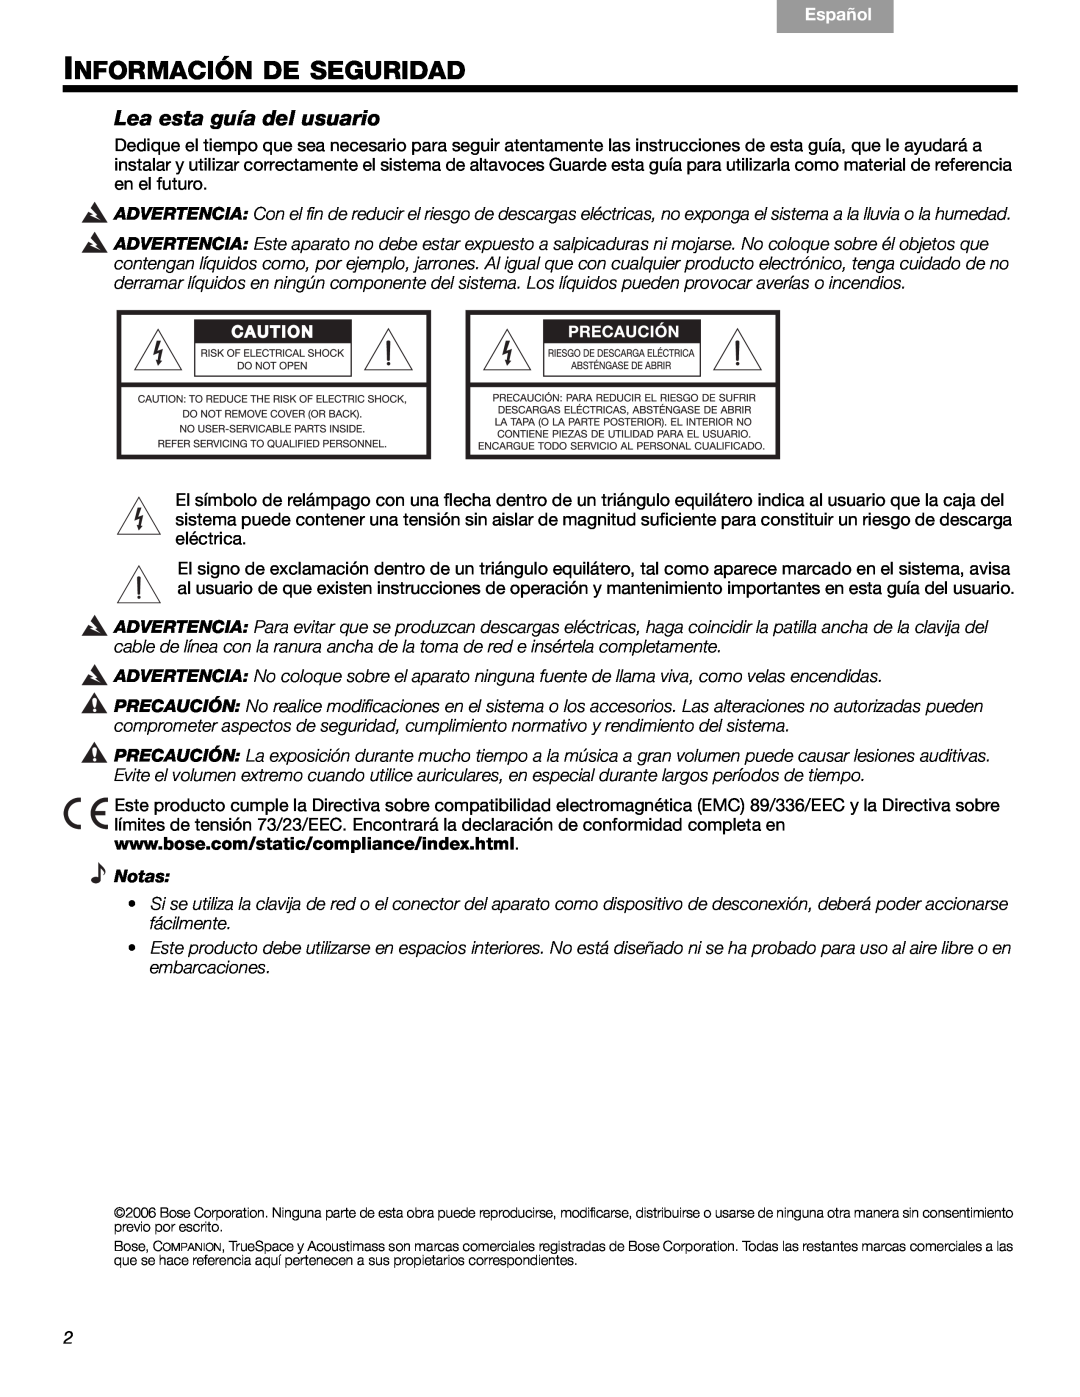 Bose 40326, Companion (R) 5 manual Información De Seguridad, Lea esta guía del usuario, Français, Español, English, Notas 